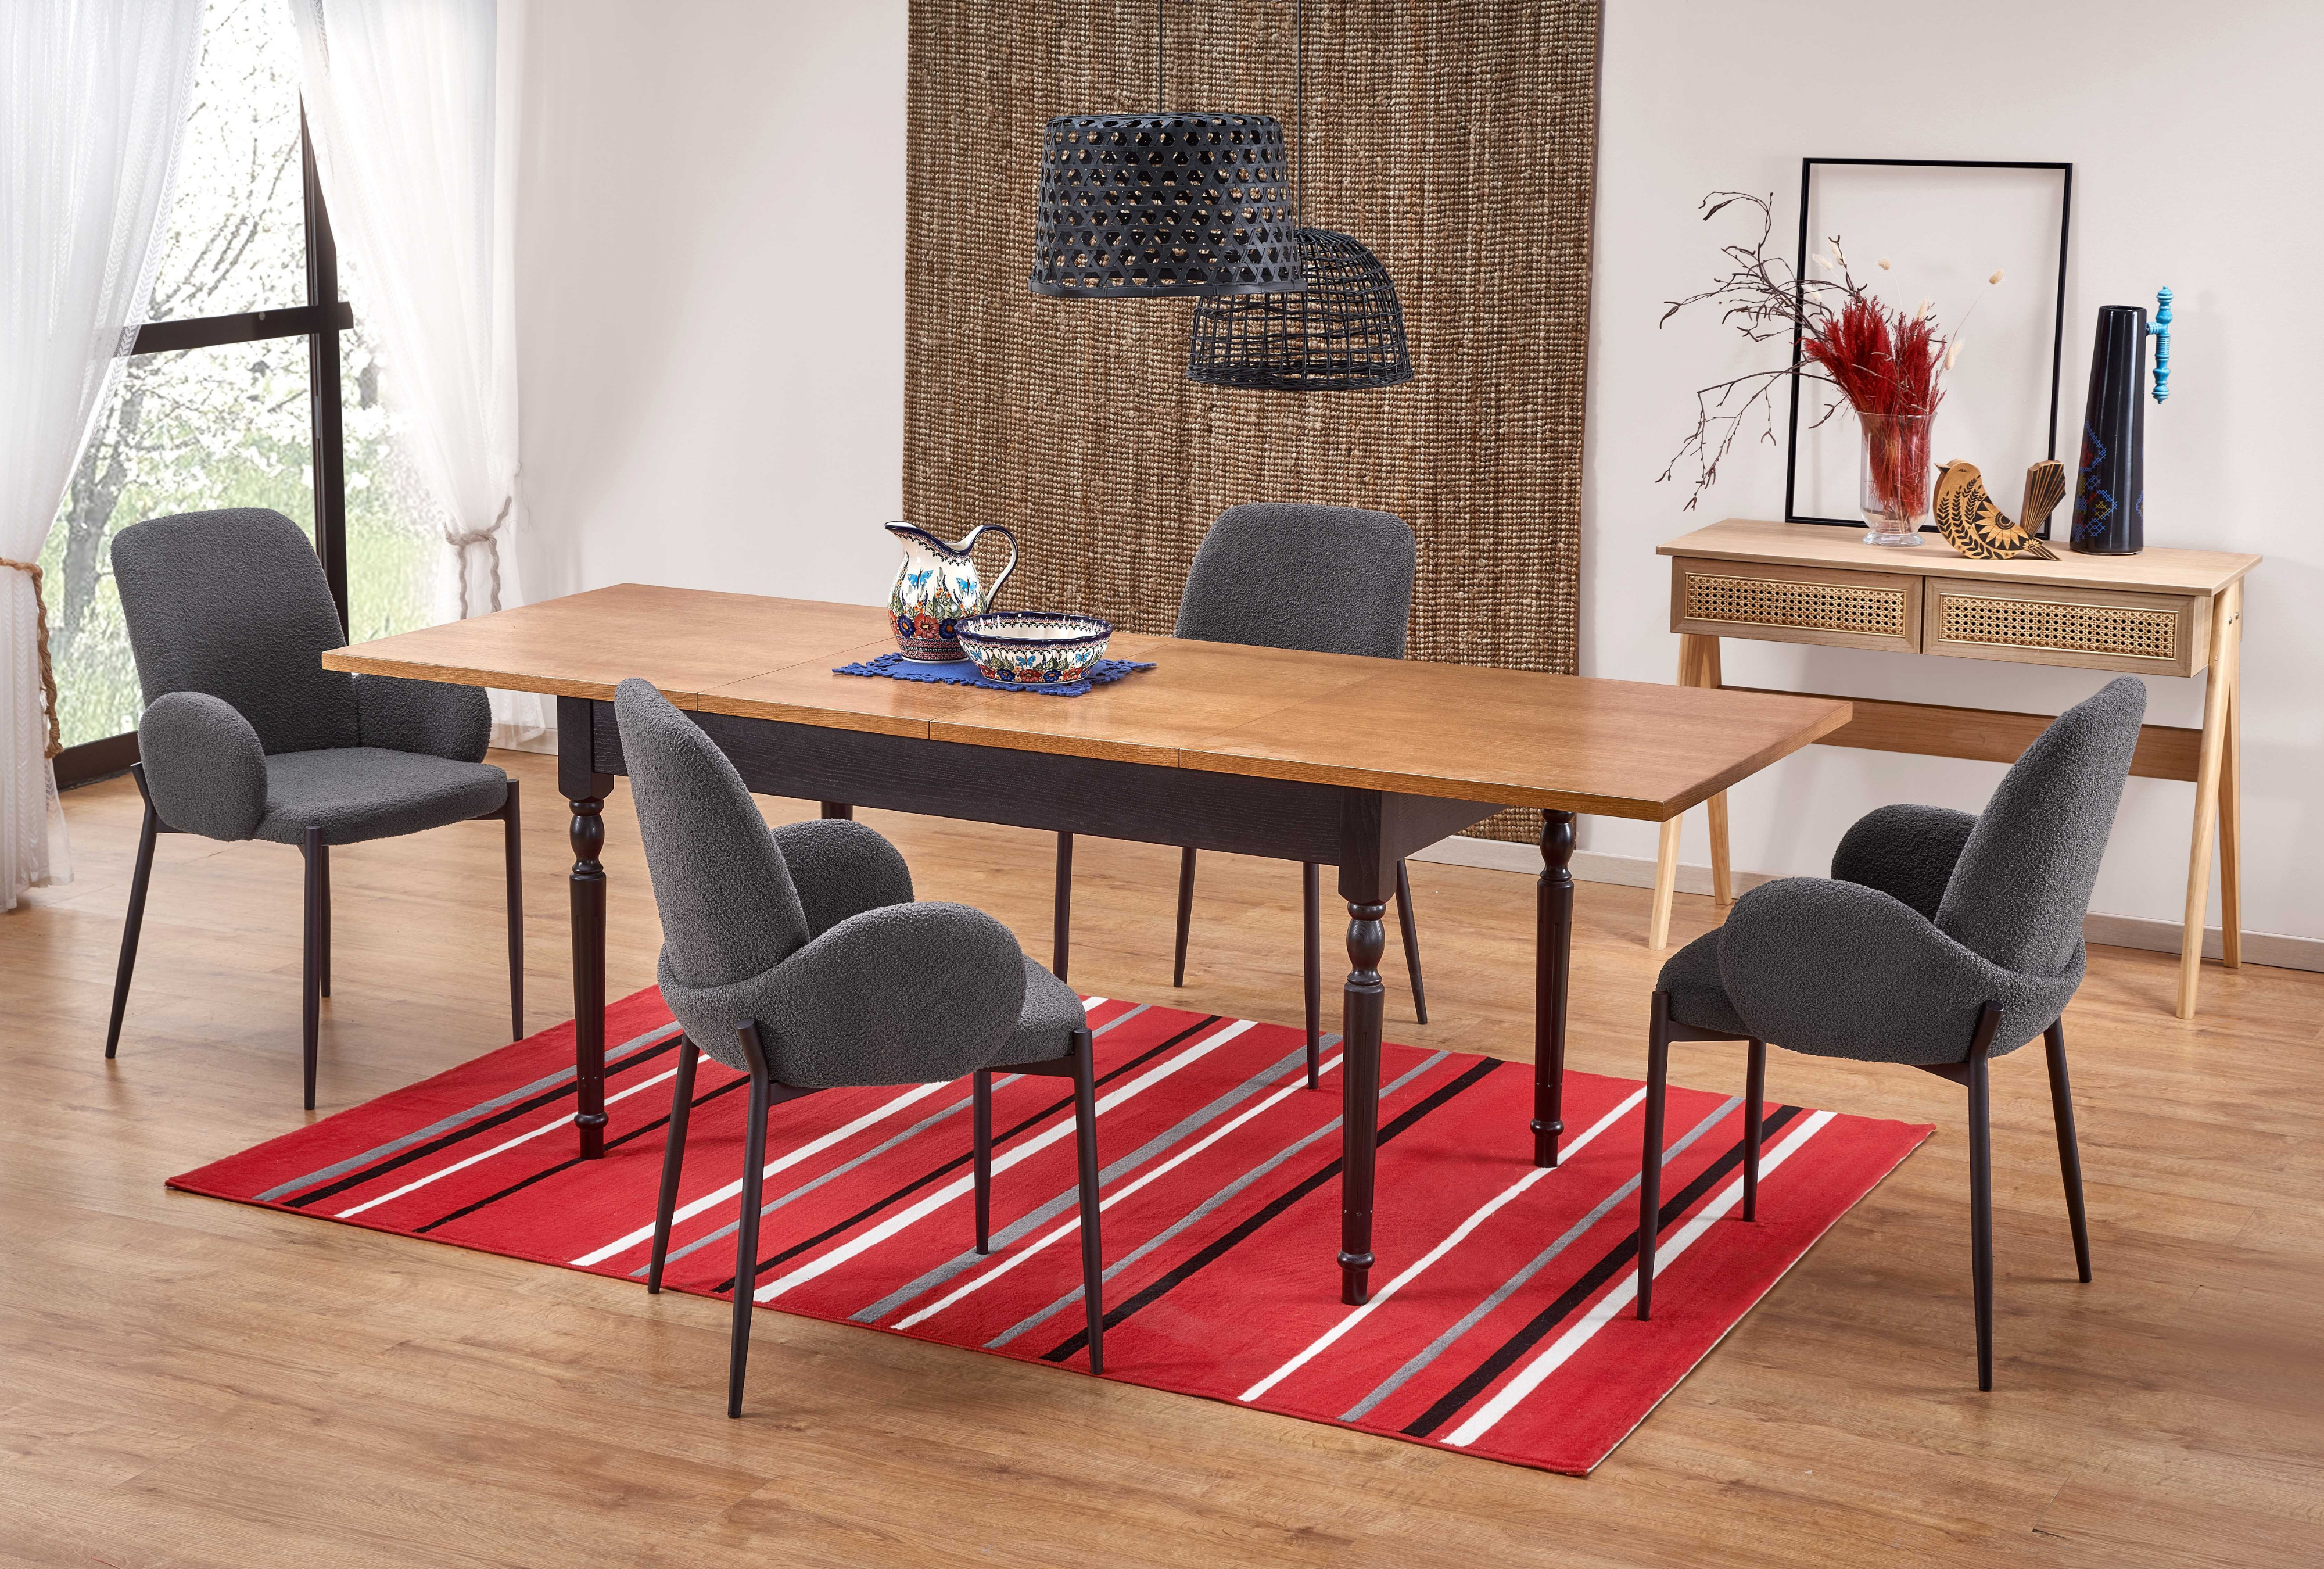 Sims asztal, 140-220 x 80 cm